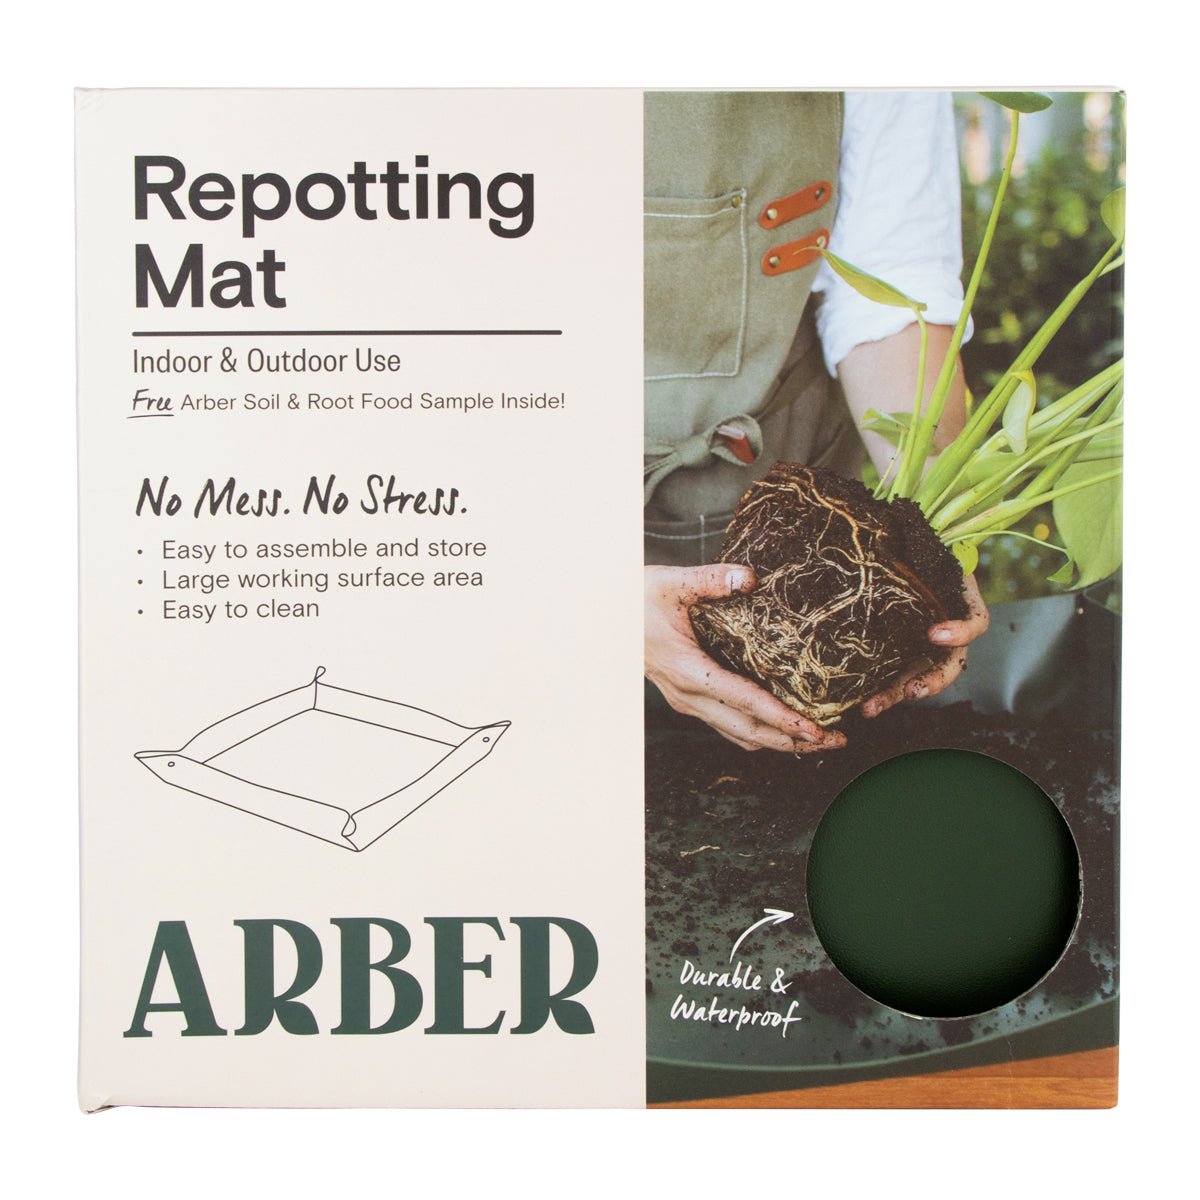 Repotting Mat - Arber